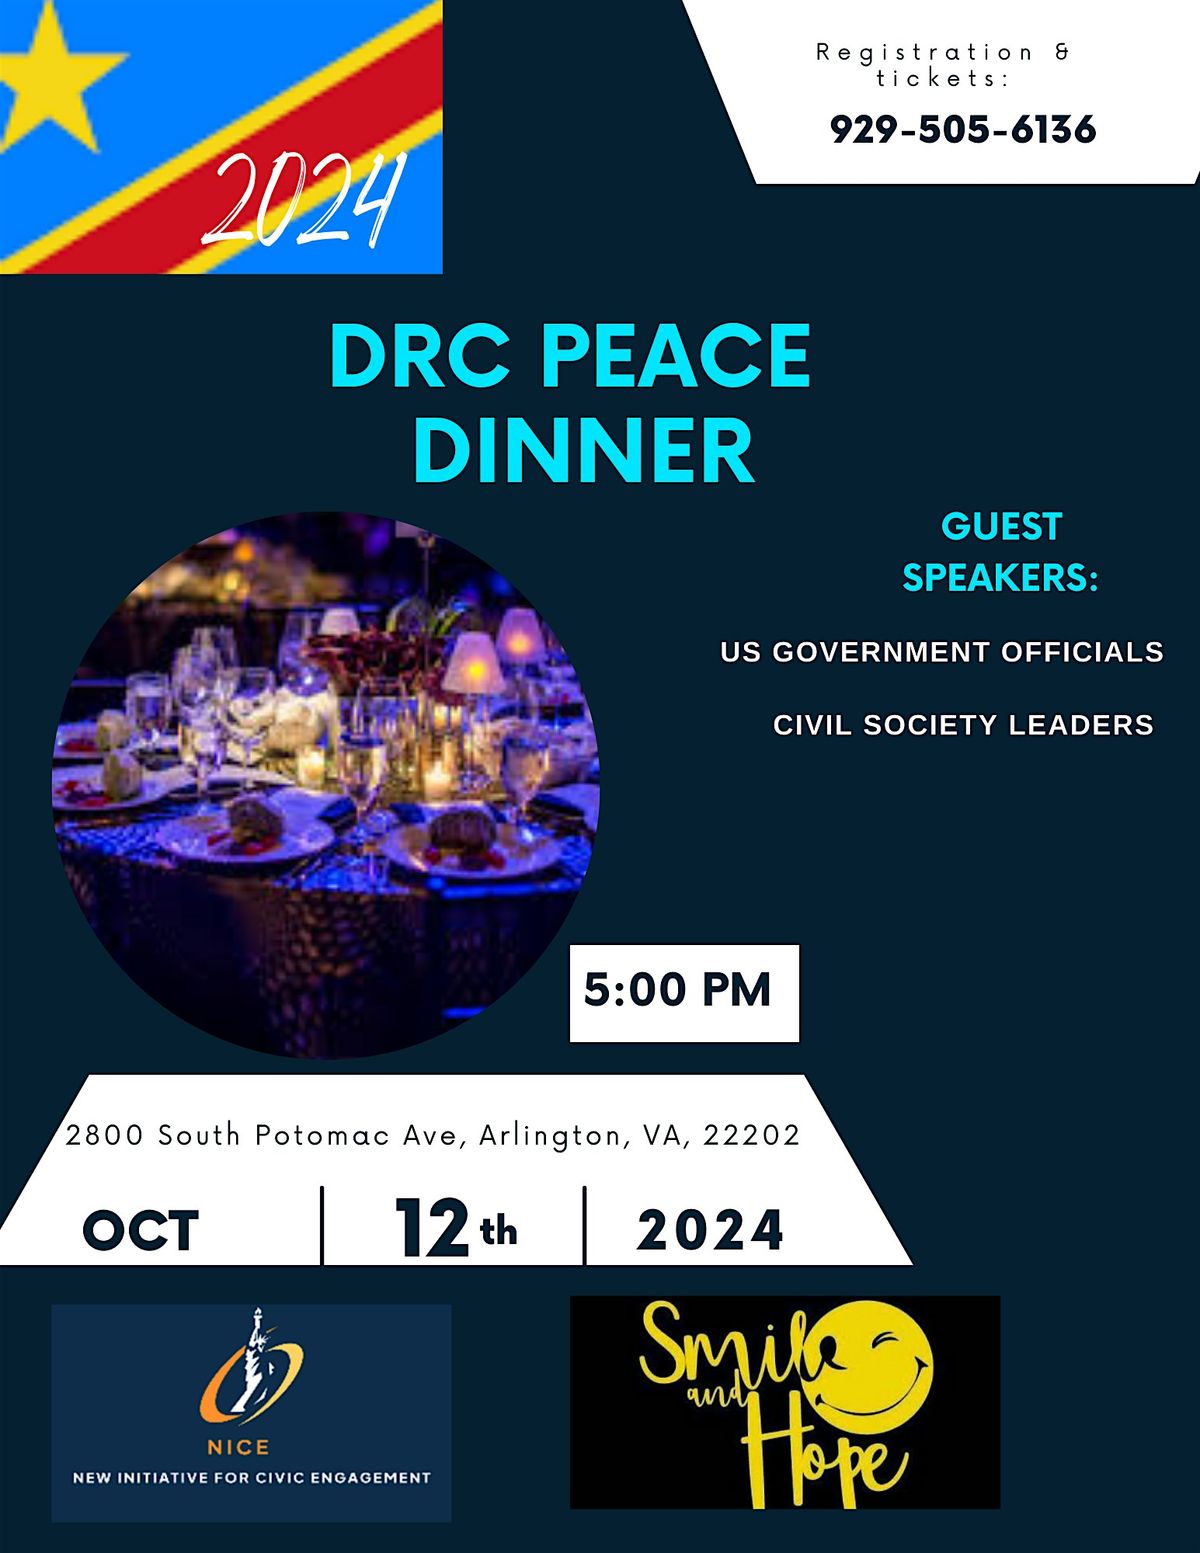 DRC PEACE DINNER